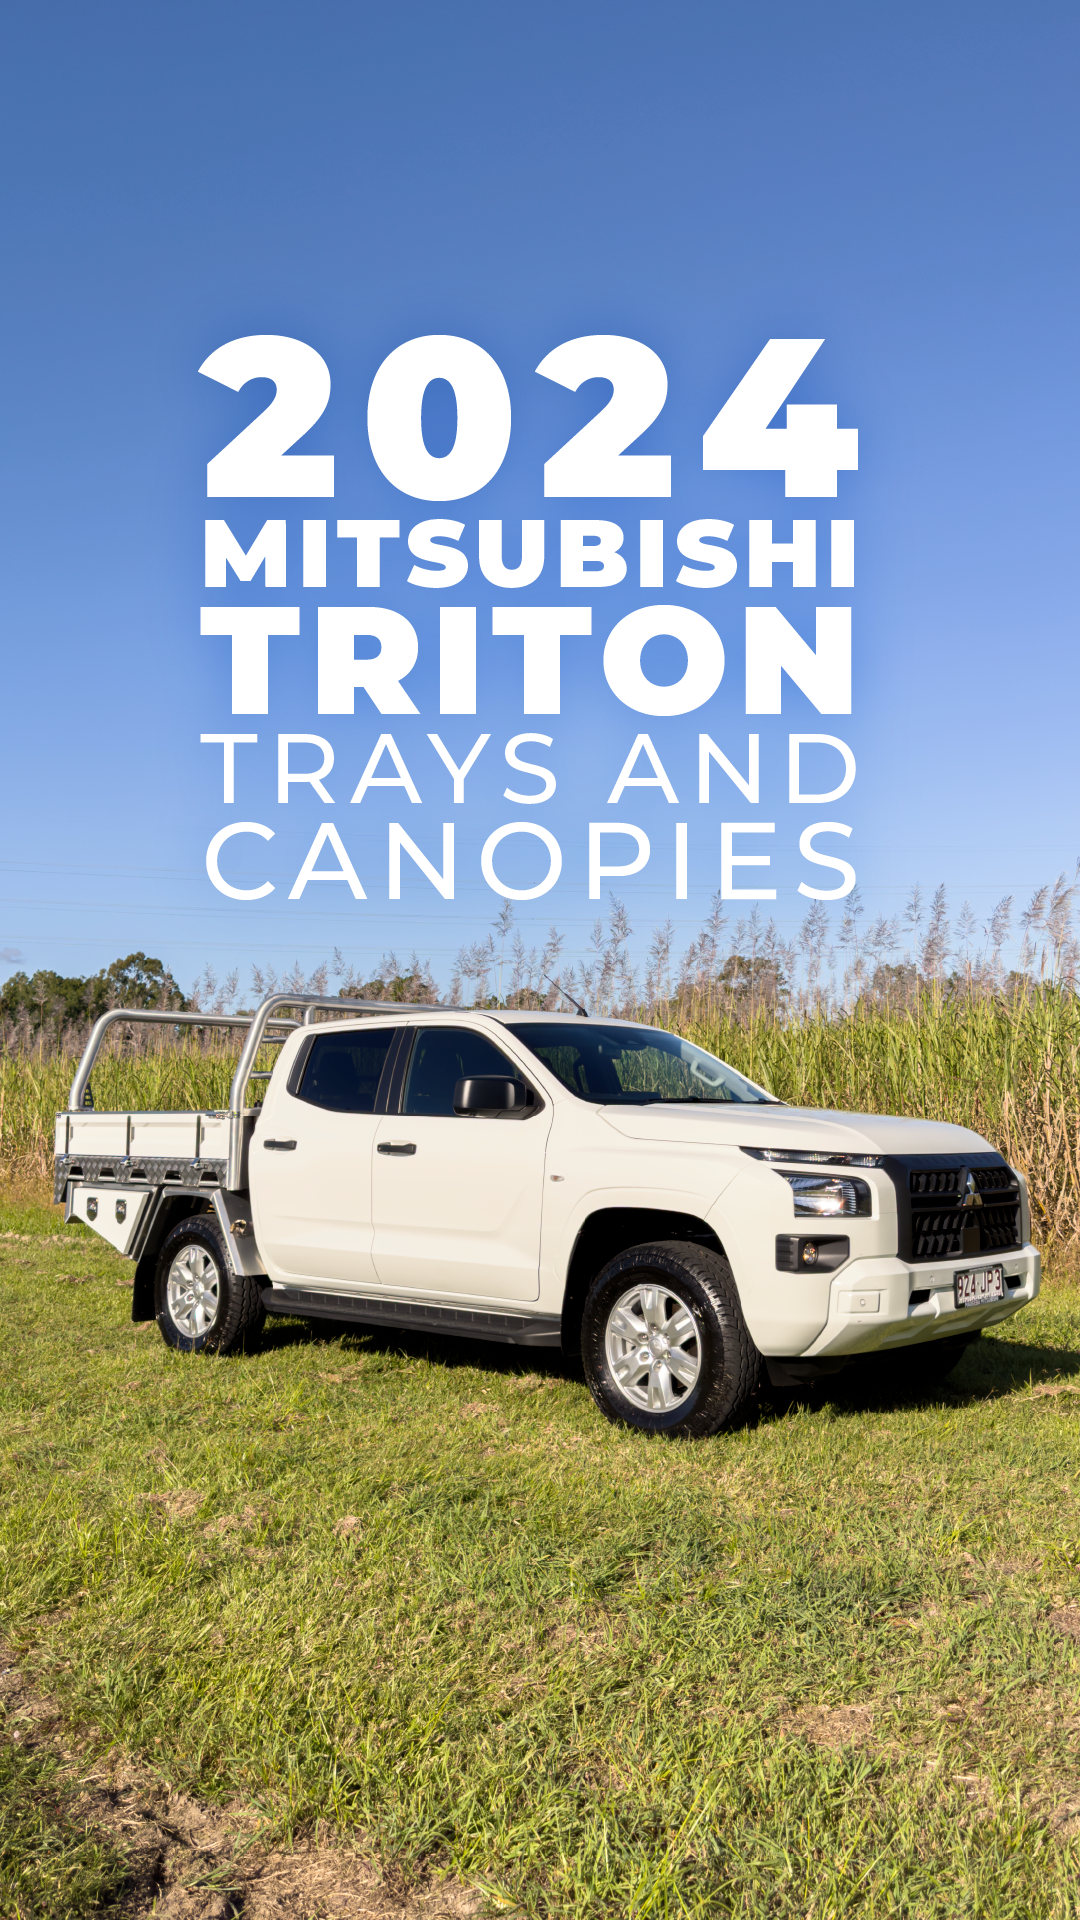 2024 Mitsubishi Triton UteTrays & Canopies Now Available